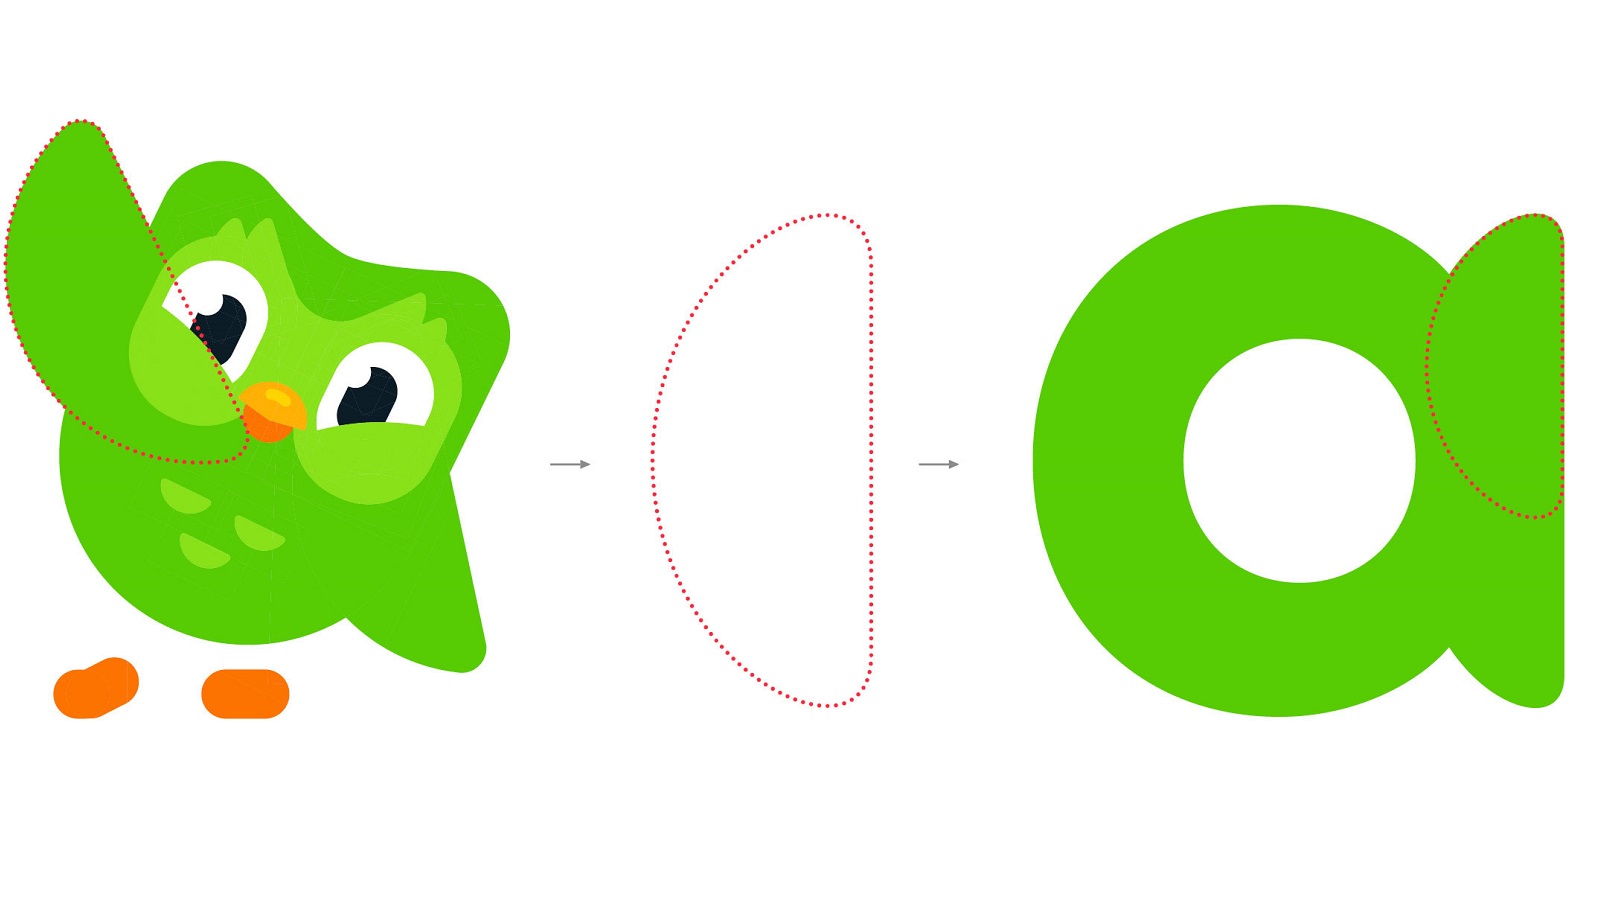 Duolingo’s Mascot Sets Tone of Their New Visual Identity